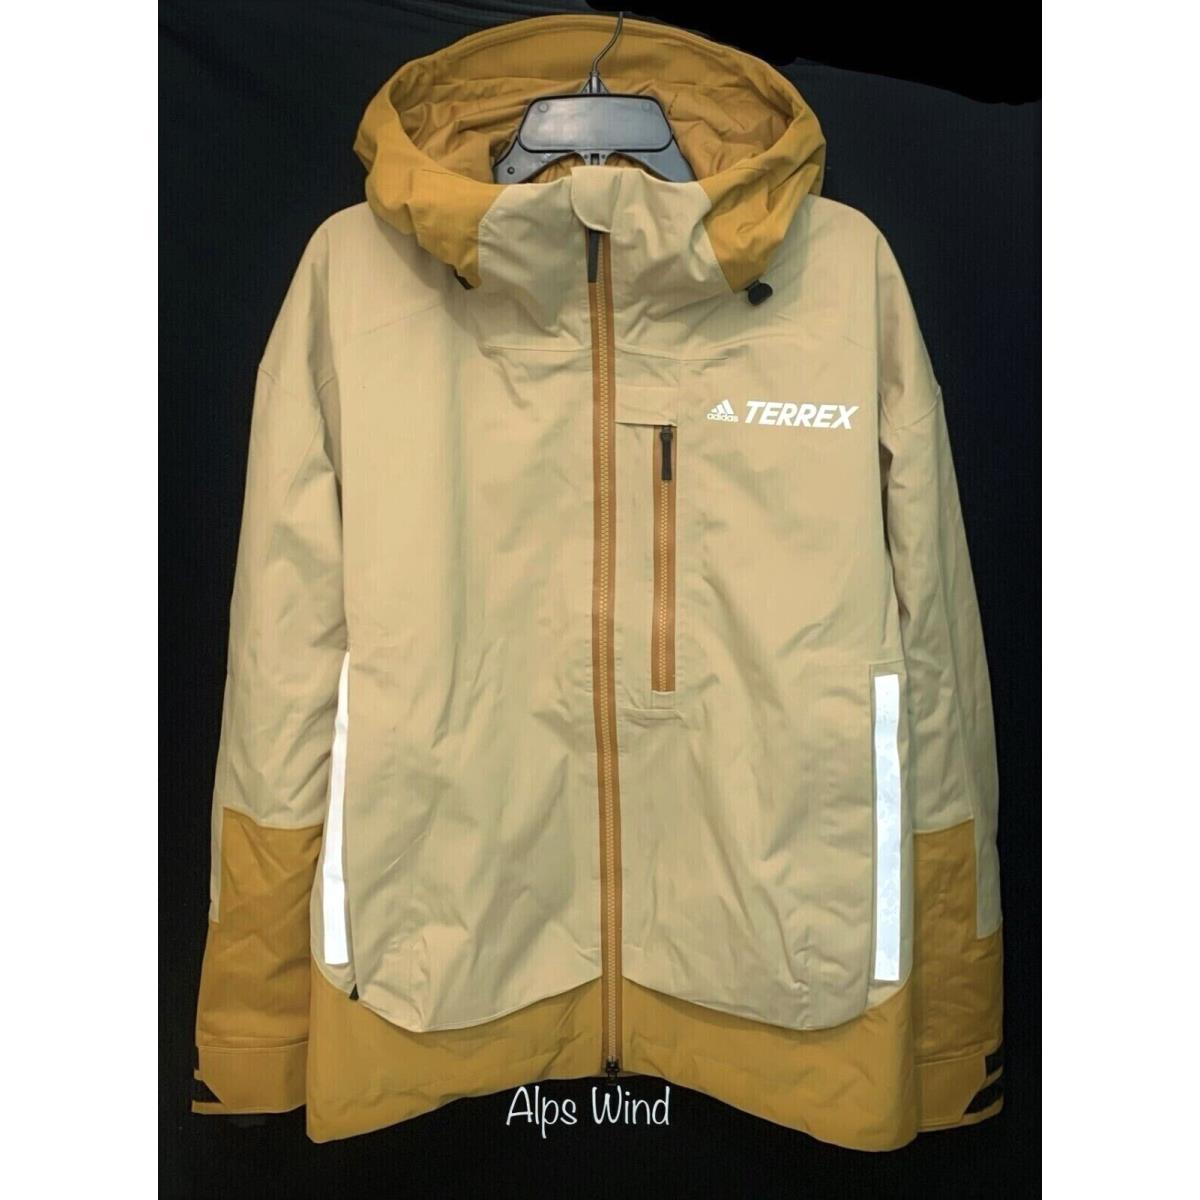 Adidas Terrex Myshelter In Jack2l M Snow Jacket in Beigetone Size: M L NWT$350